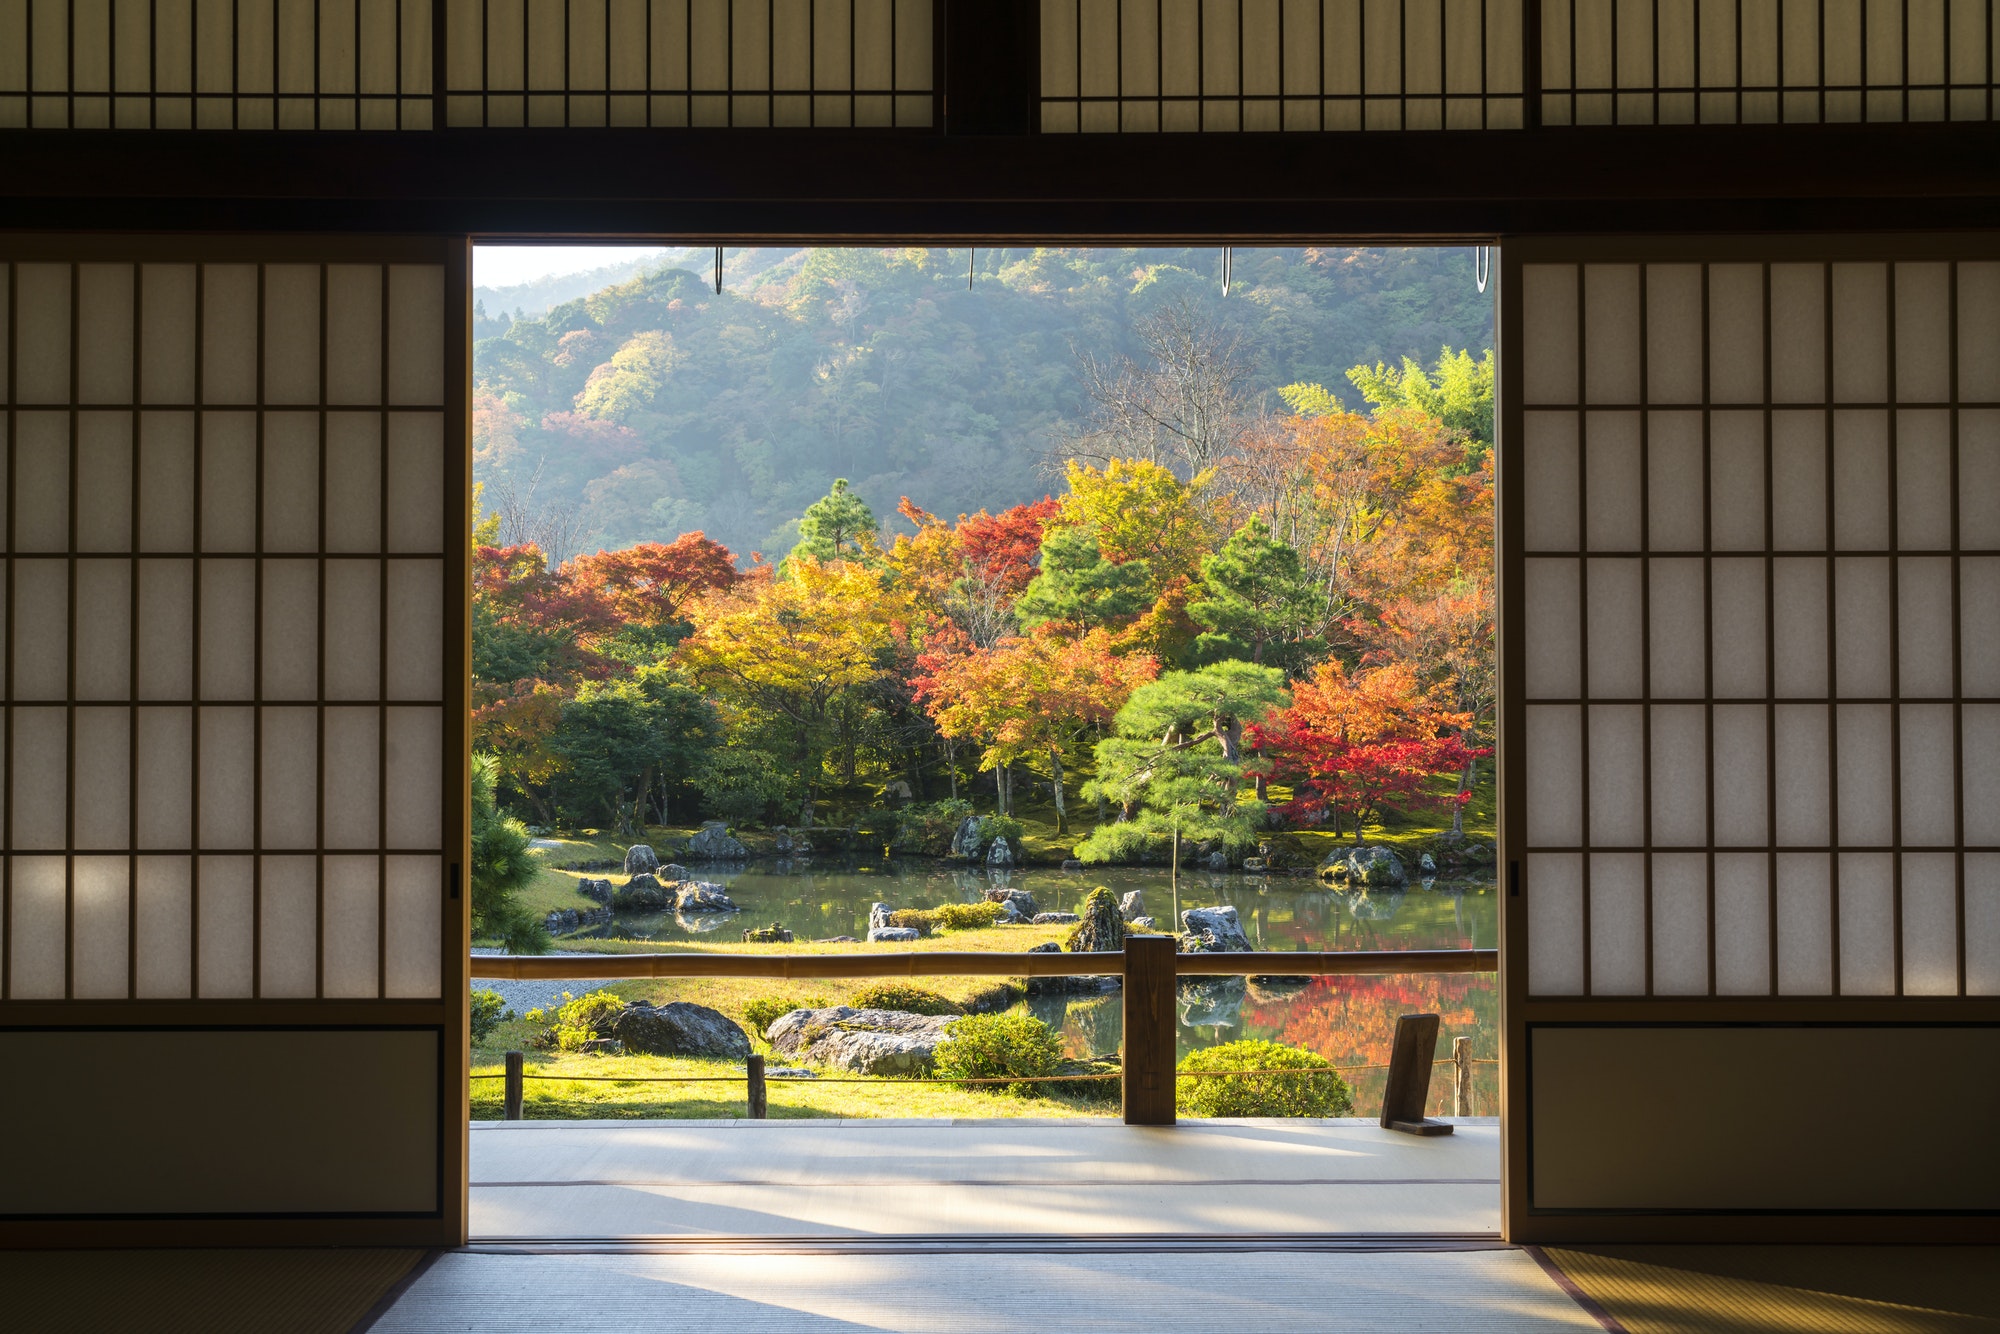 View through traditional Japanese sliding door into an autumn park landscape.